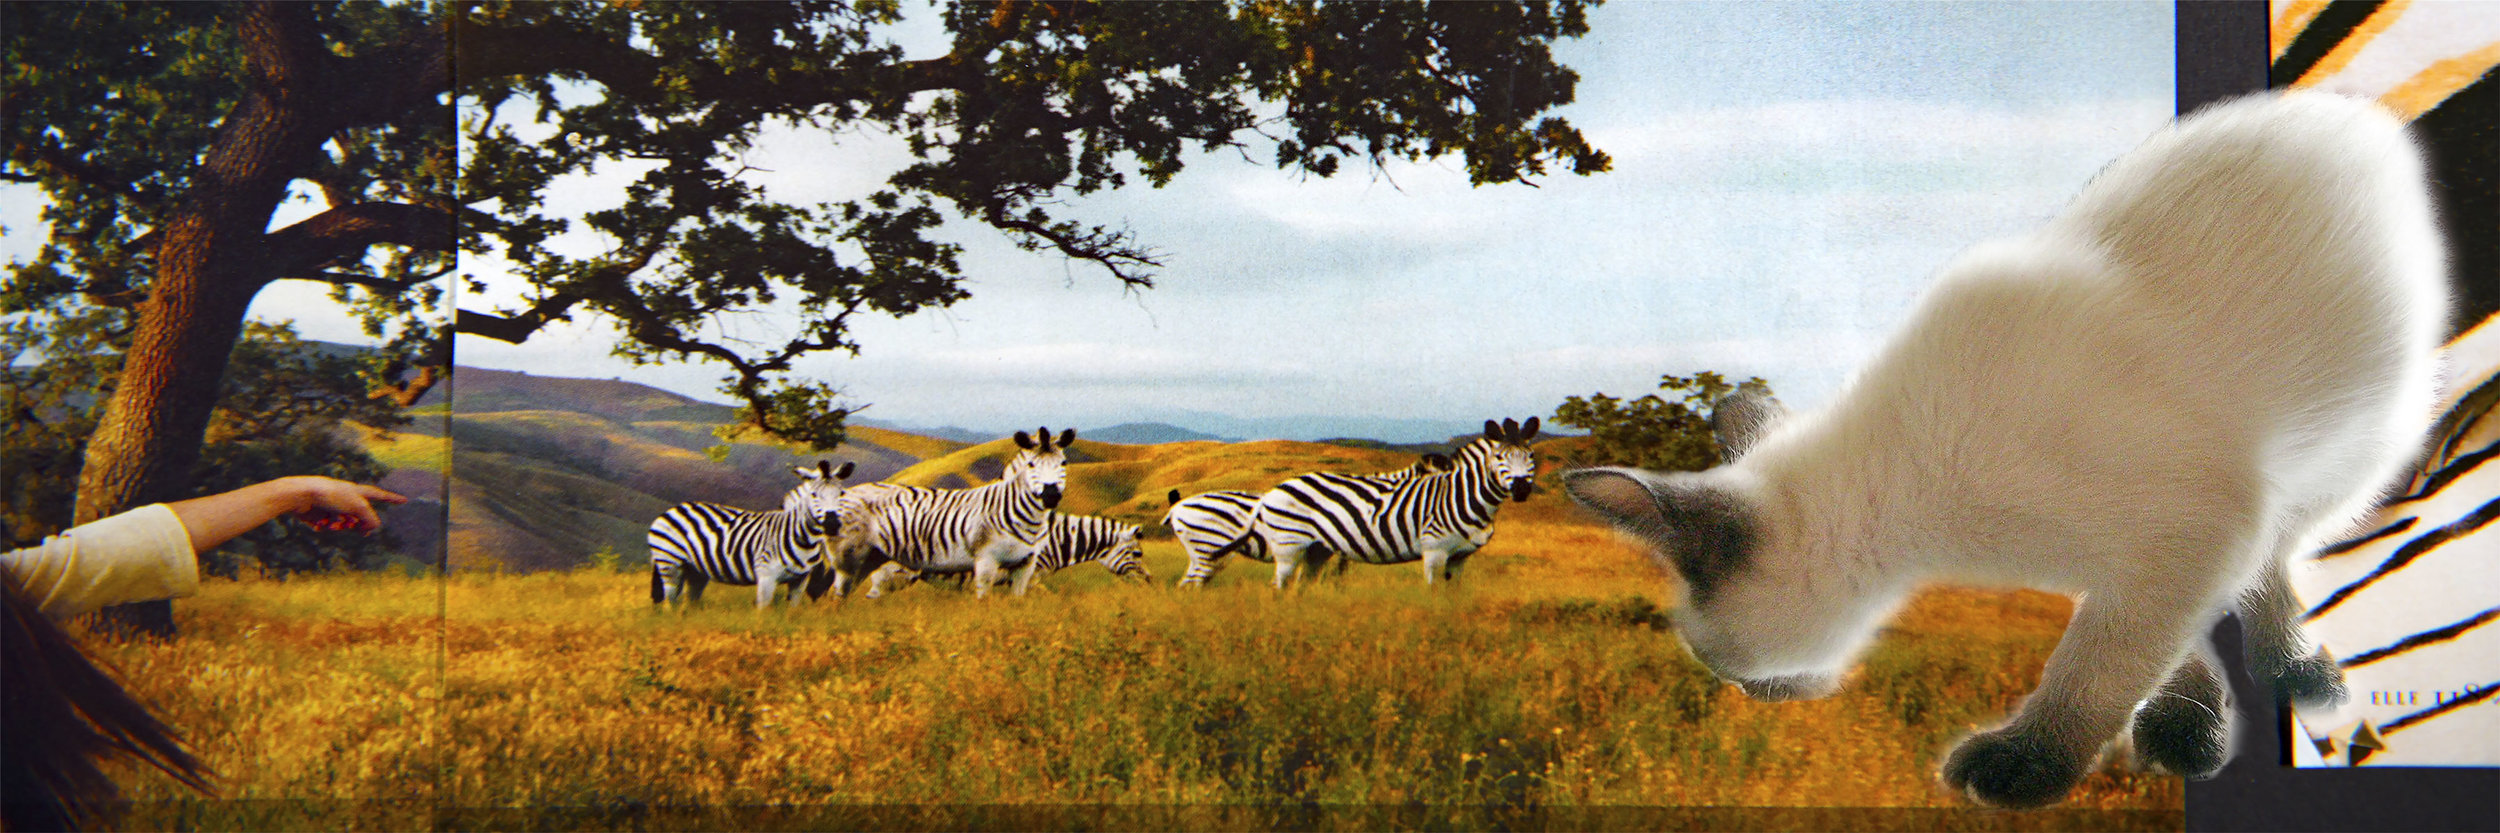 thistle and zebras long.jpg